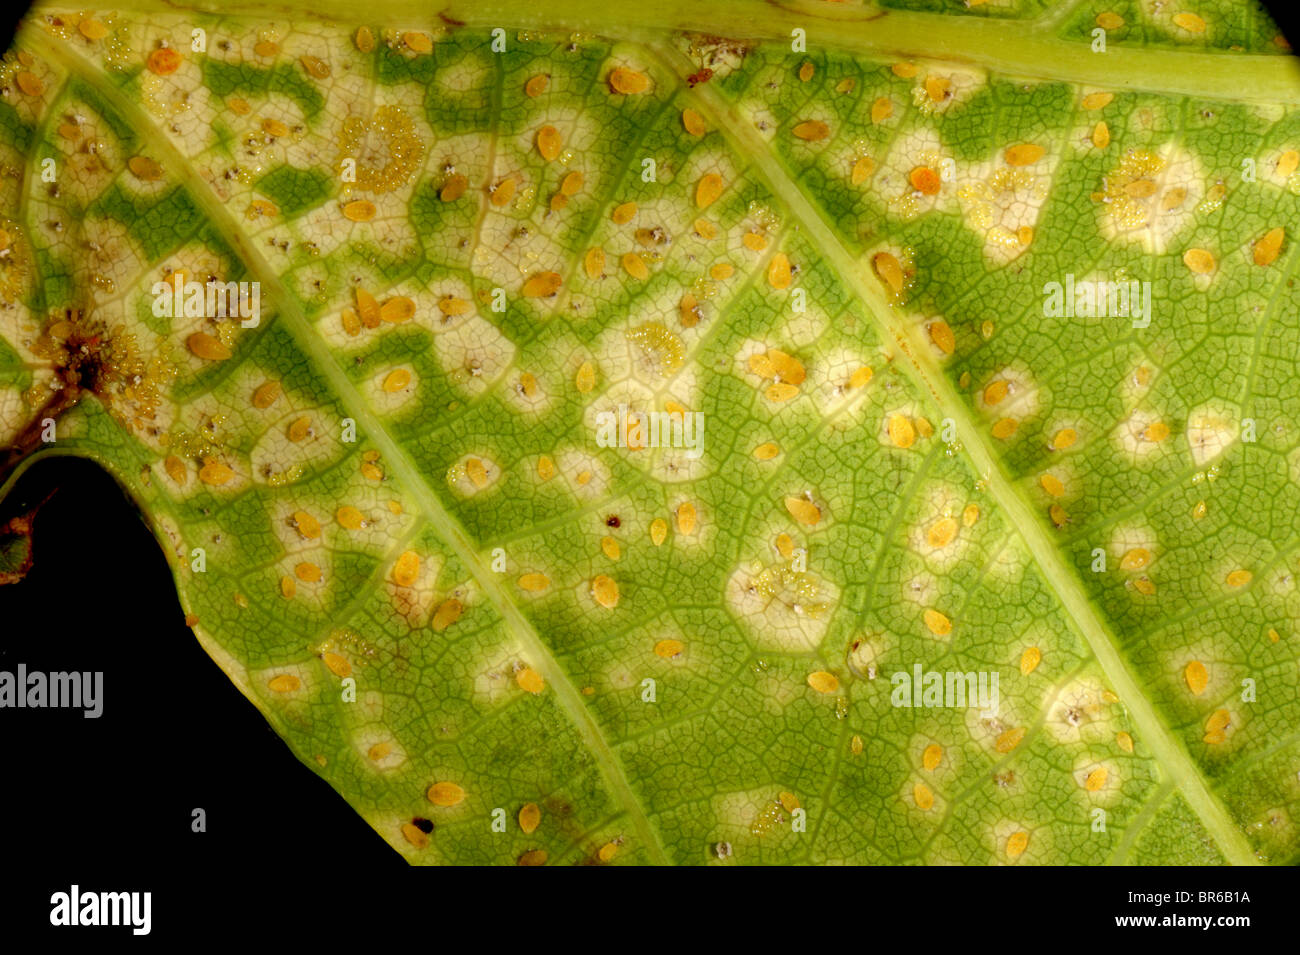 Oak leaf phylloxera (Phylloxera glabra) females, eggs and damage to oak tree leaves Stock Photo